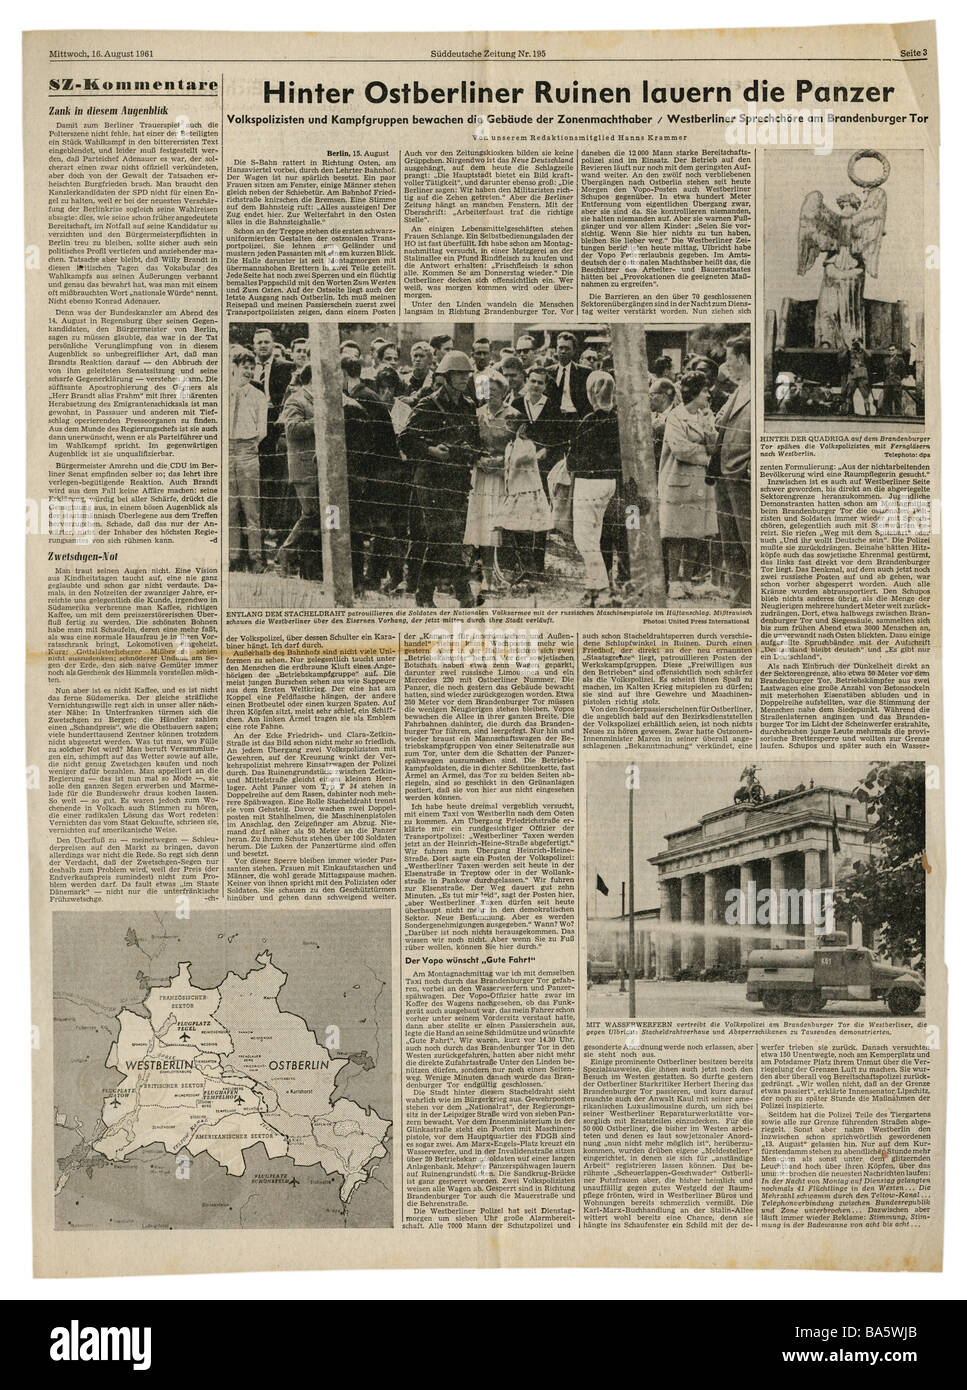 press/media, magazines, 'Süddeutsche Zeitung', Munich, 17 volume, number 195, Tuesday 16.8.1961, article, building of Berlin wall, Stock Photo